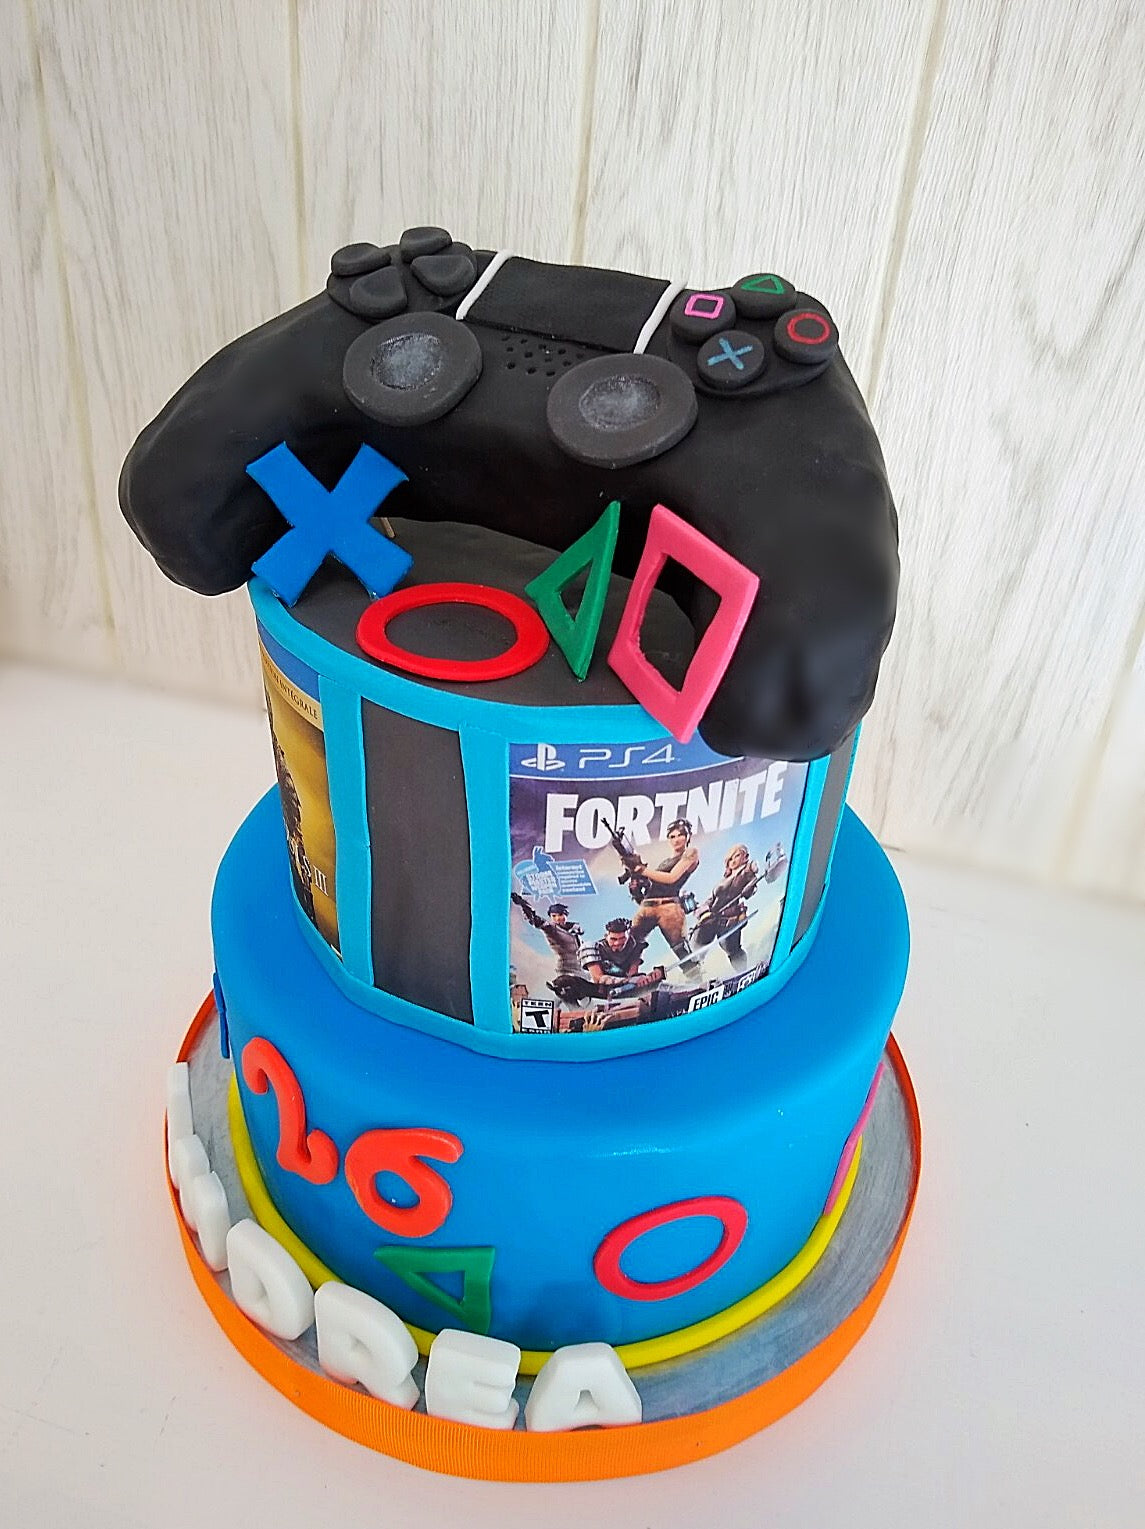 Videogame cake